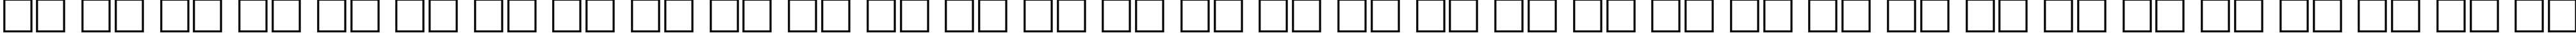 Пример написания русского алфавита шрифтом LatinWide NormalA